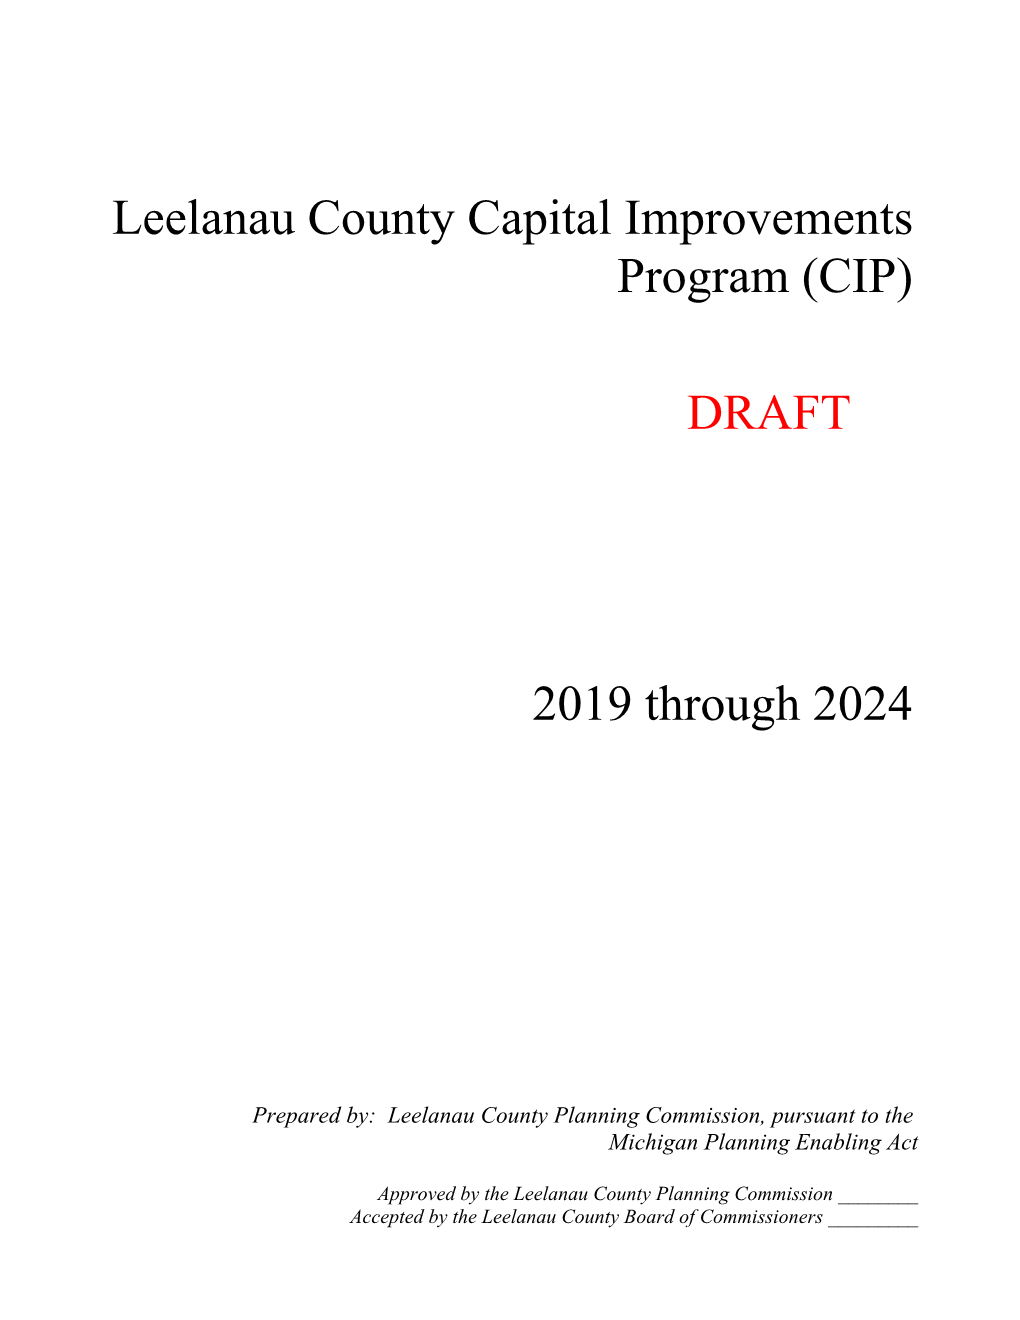 Leelanau County Capital Improvements Program (CIP) 2019